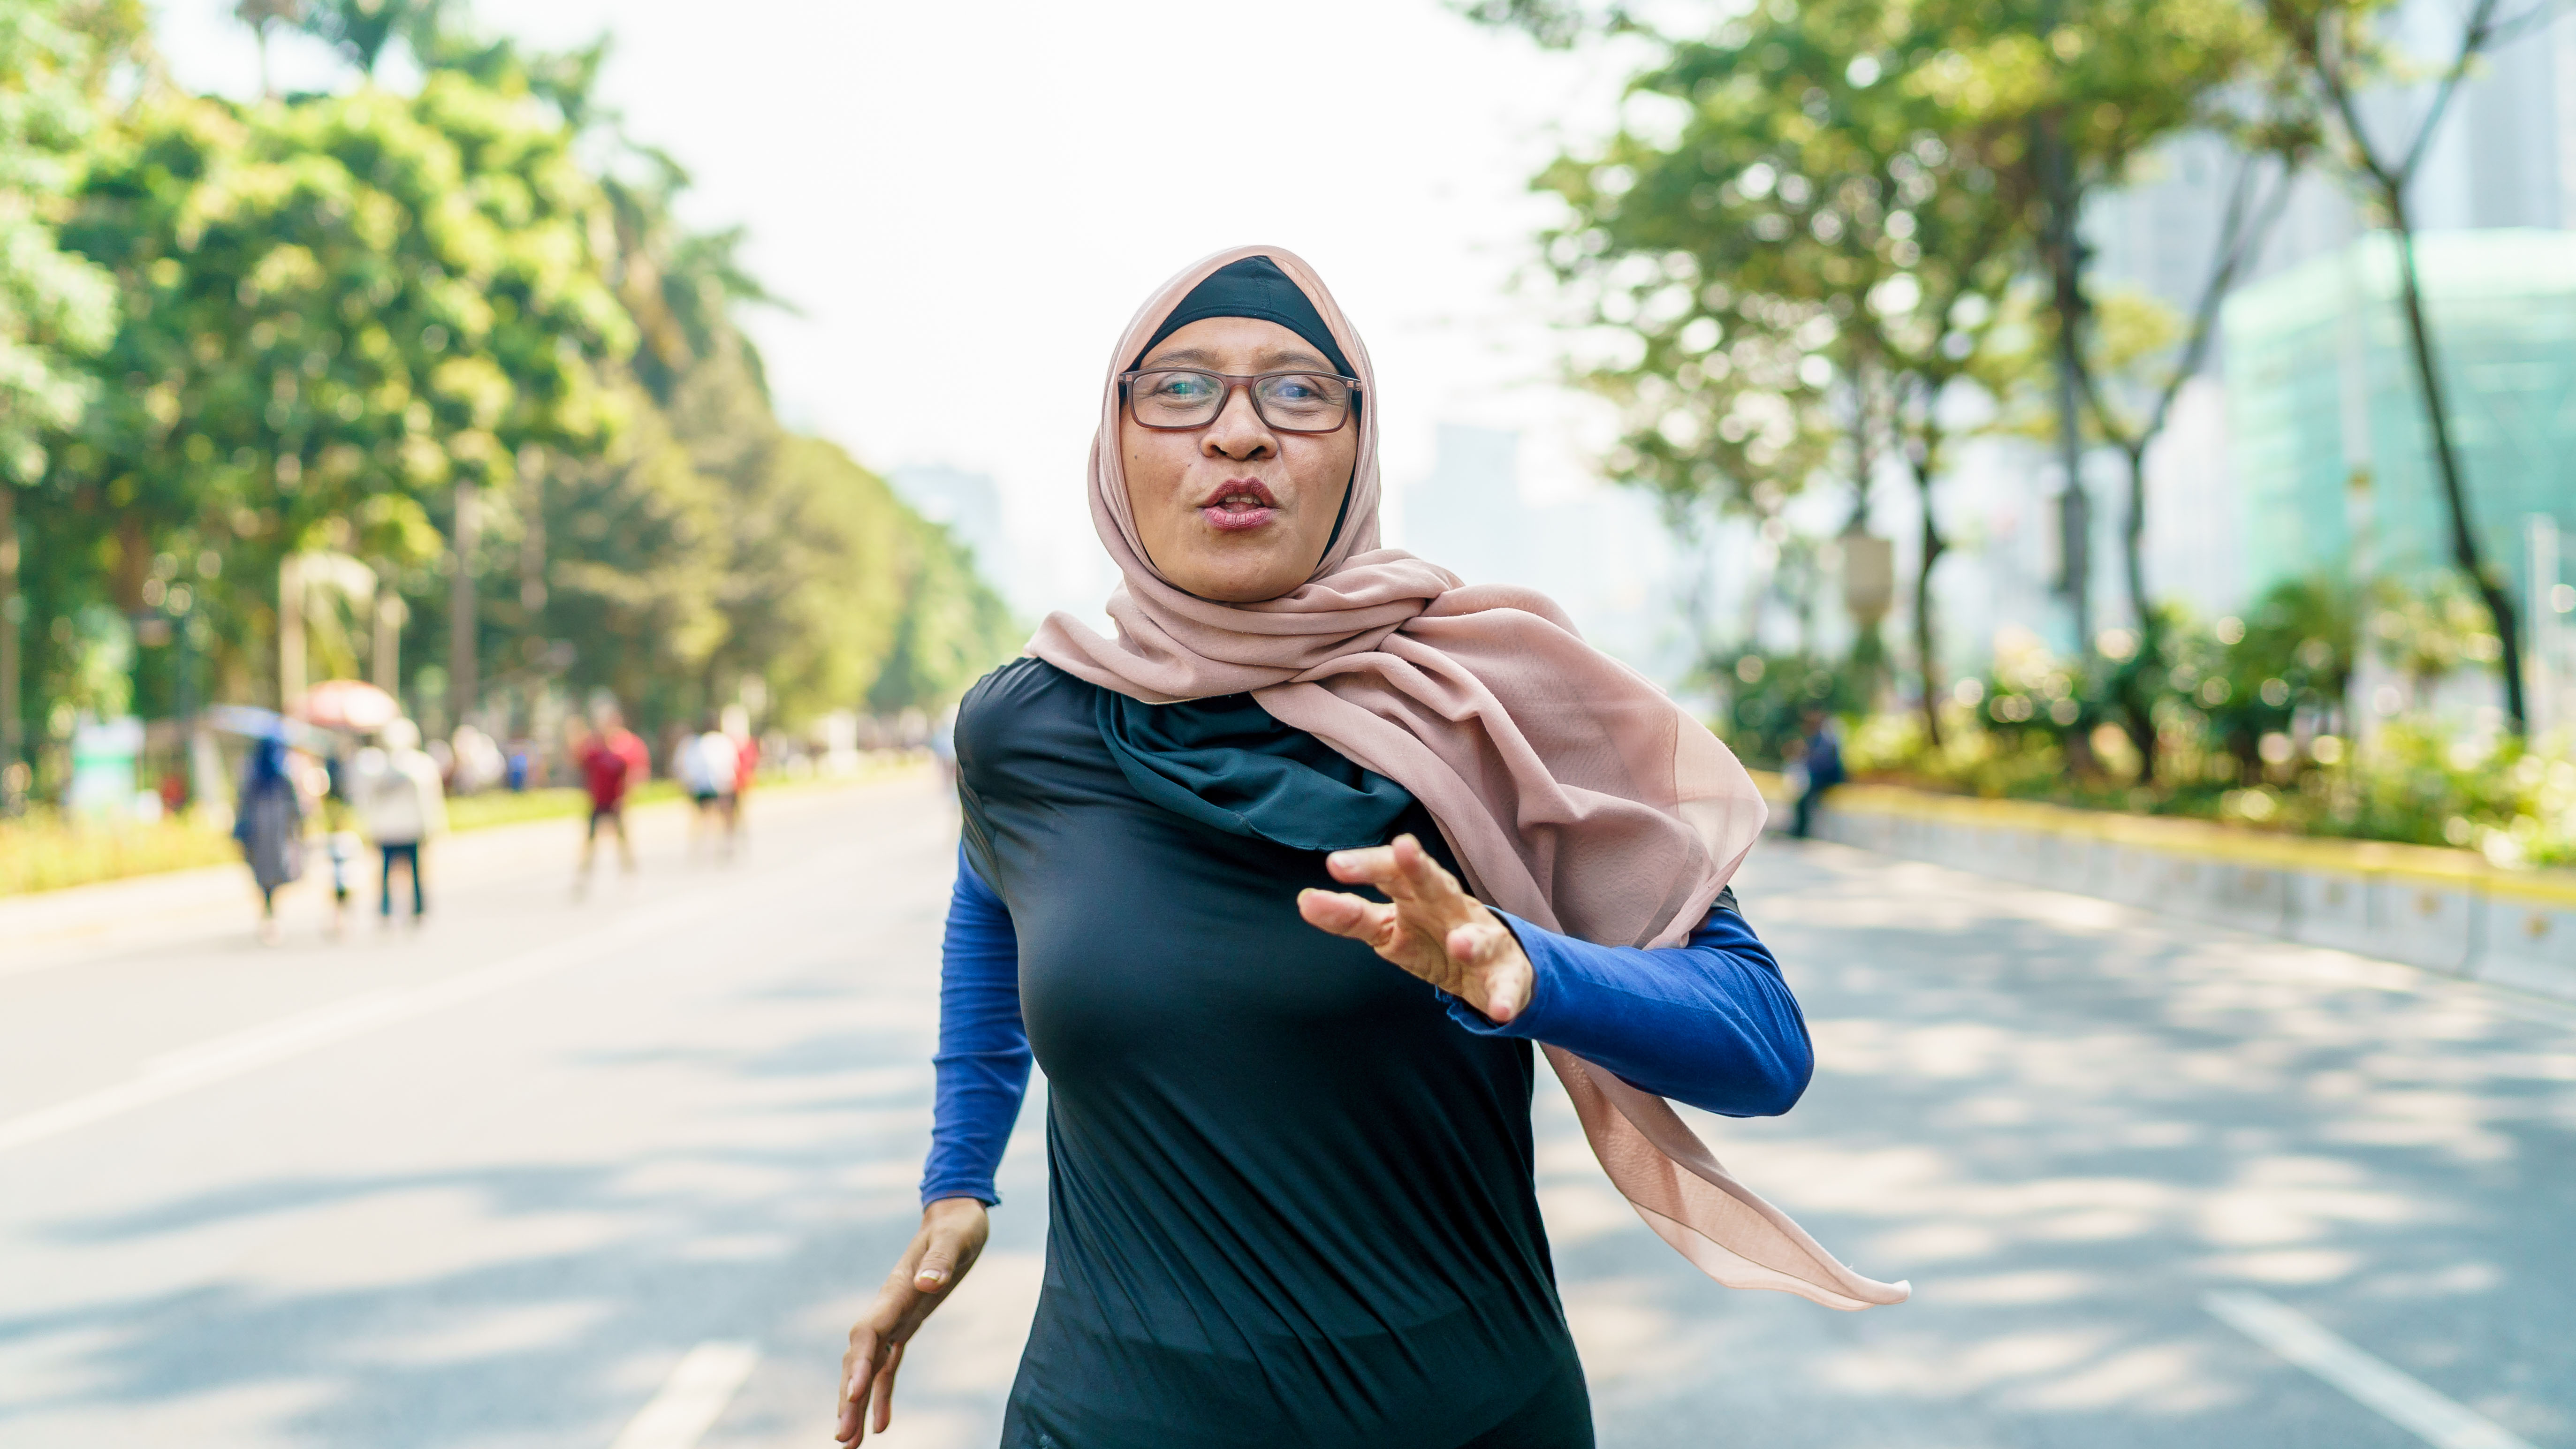 Woman runs marathon